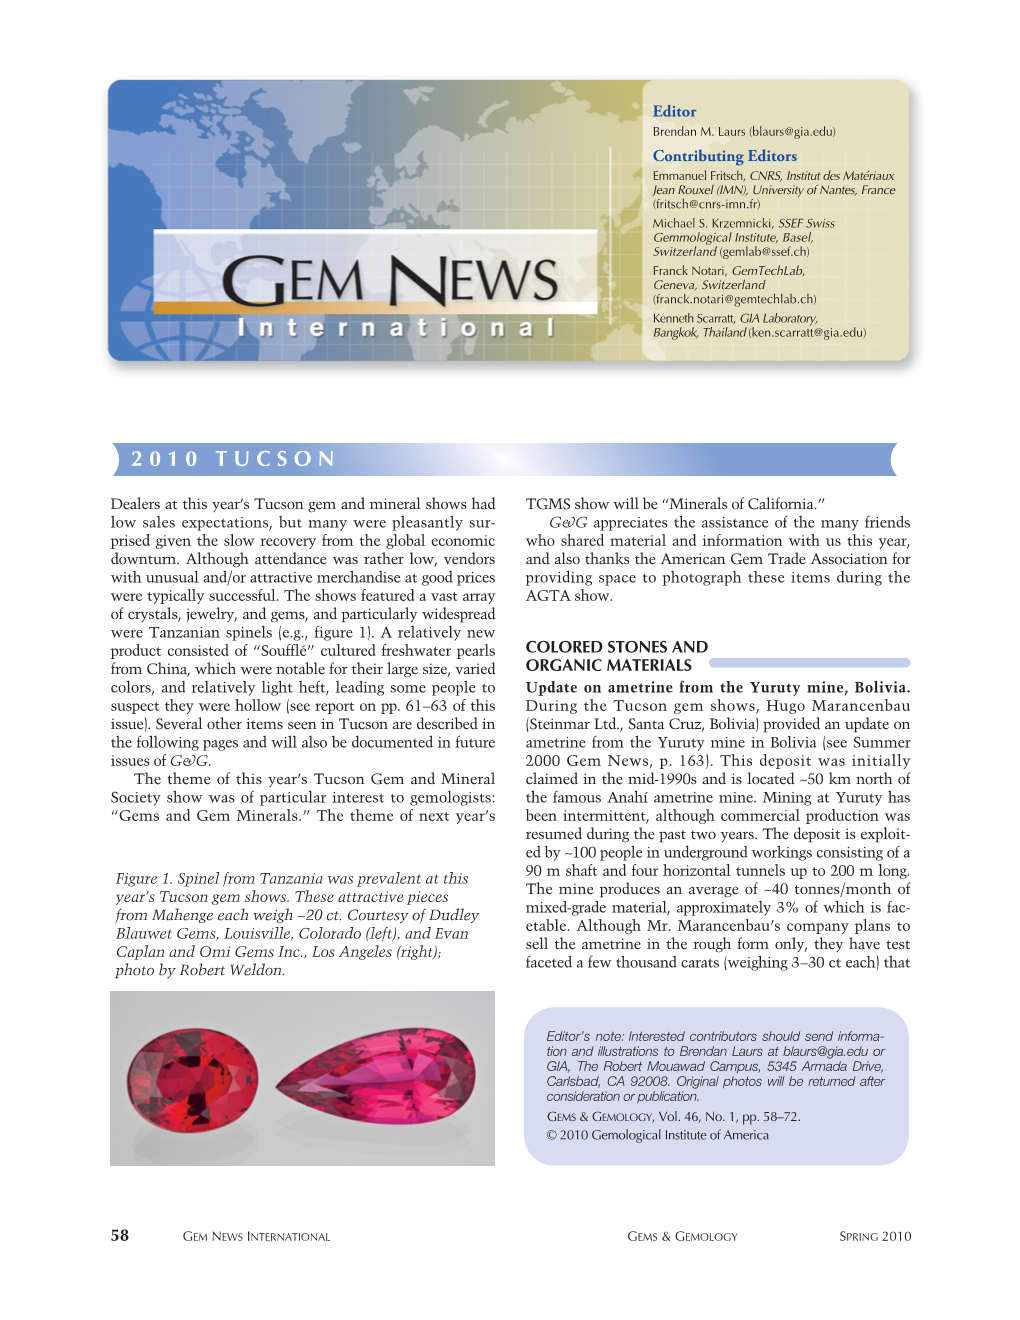 Spring 2010 Gems & Gemology Gem News International